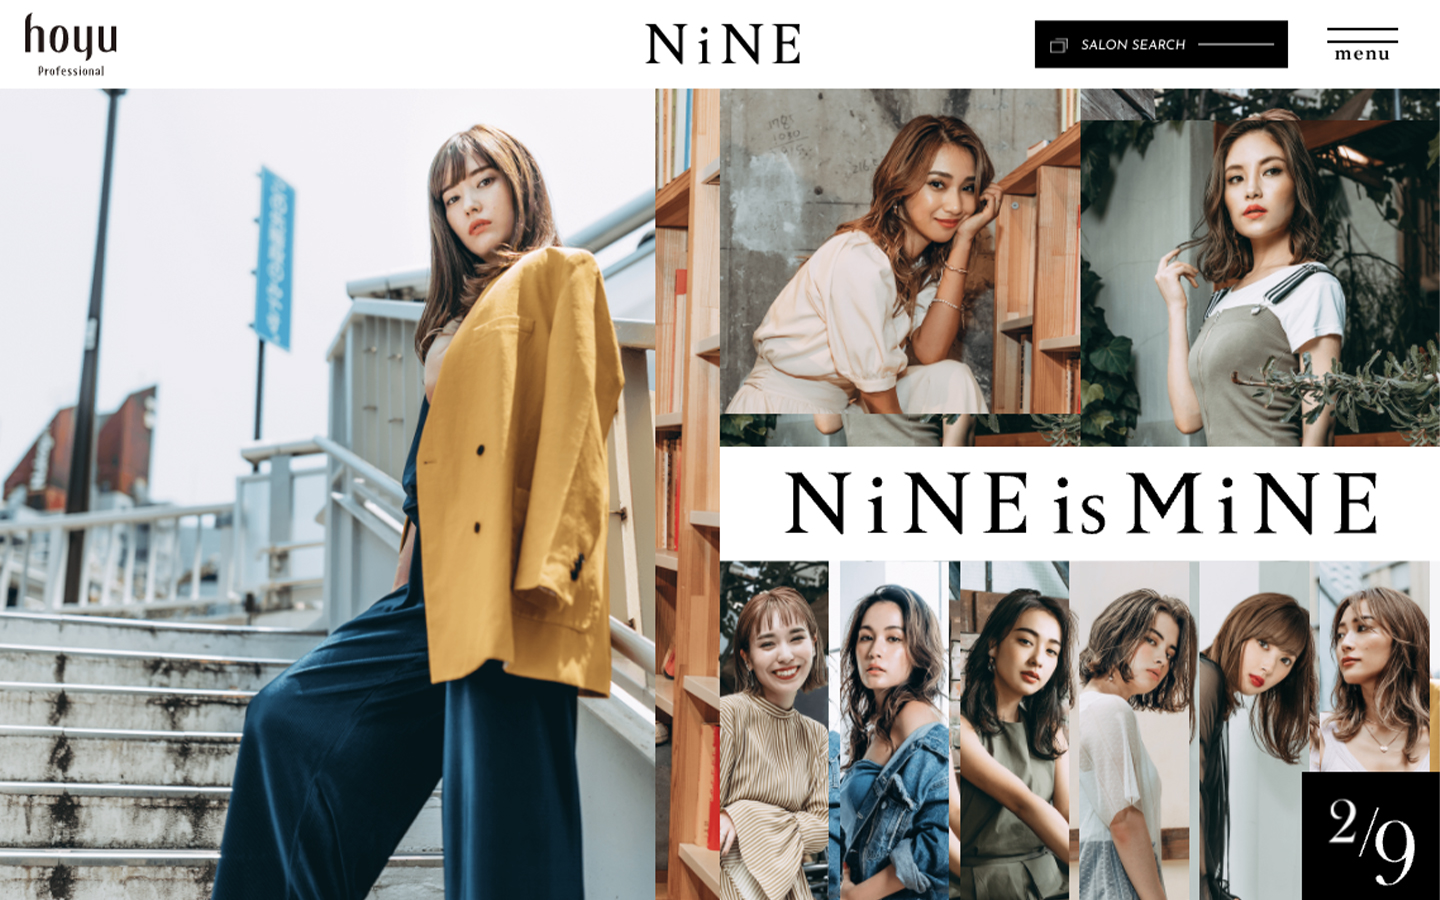 NiNE Styling Care ブランドサイト hoyu